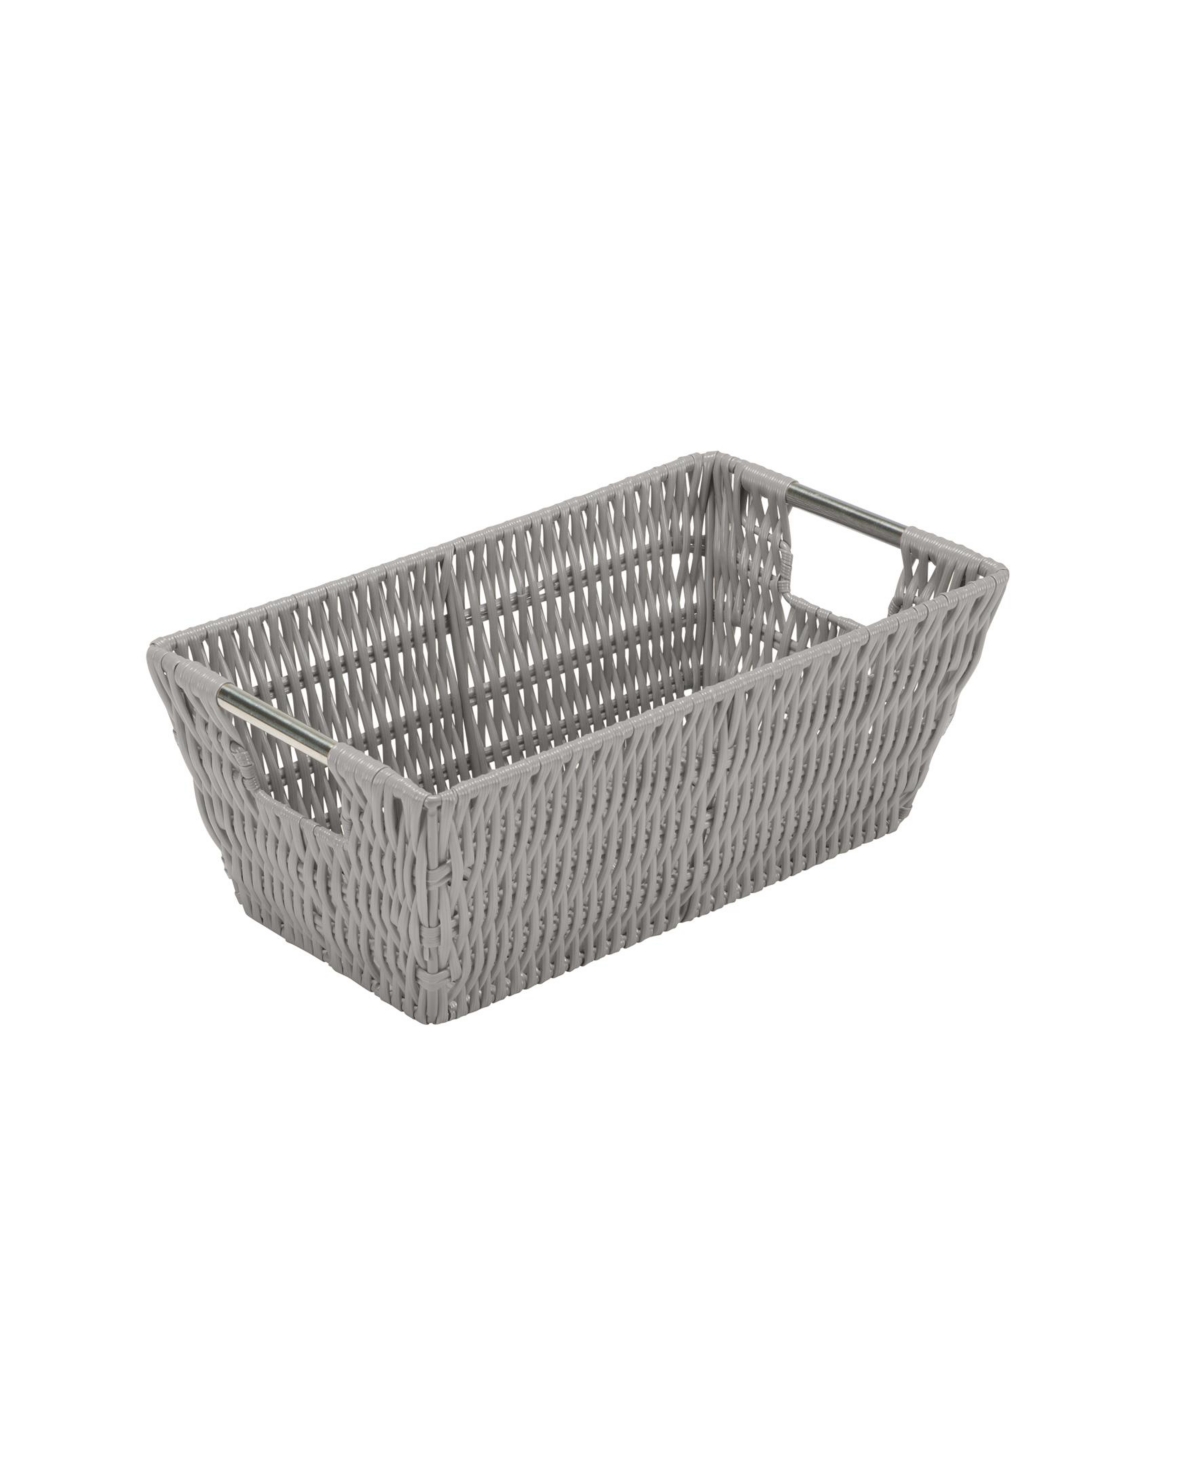 Small Shelf Storage Rattan Tote Basket - Gray